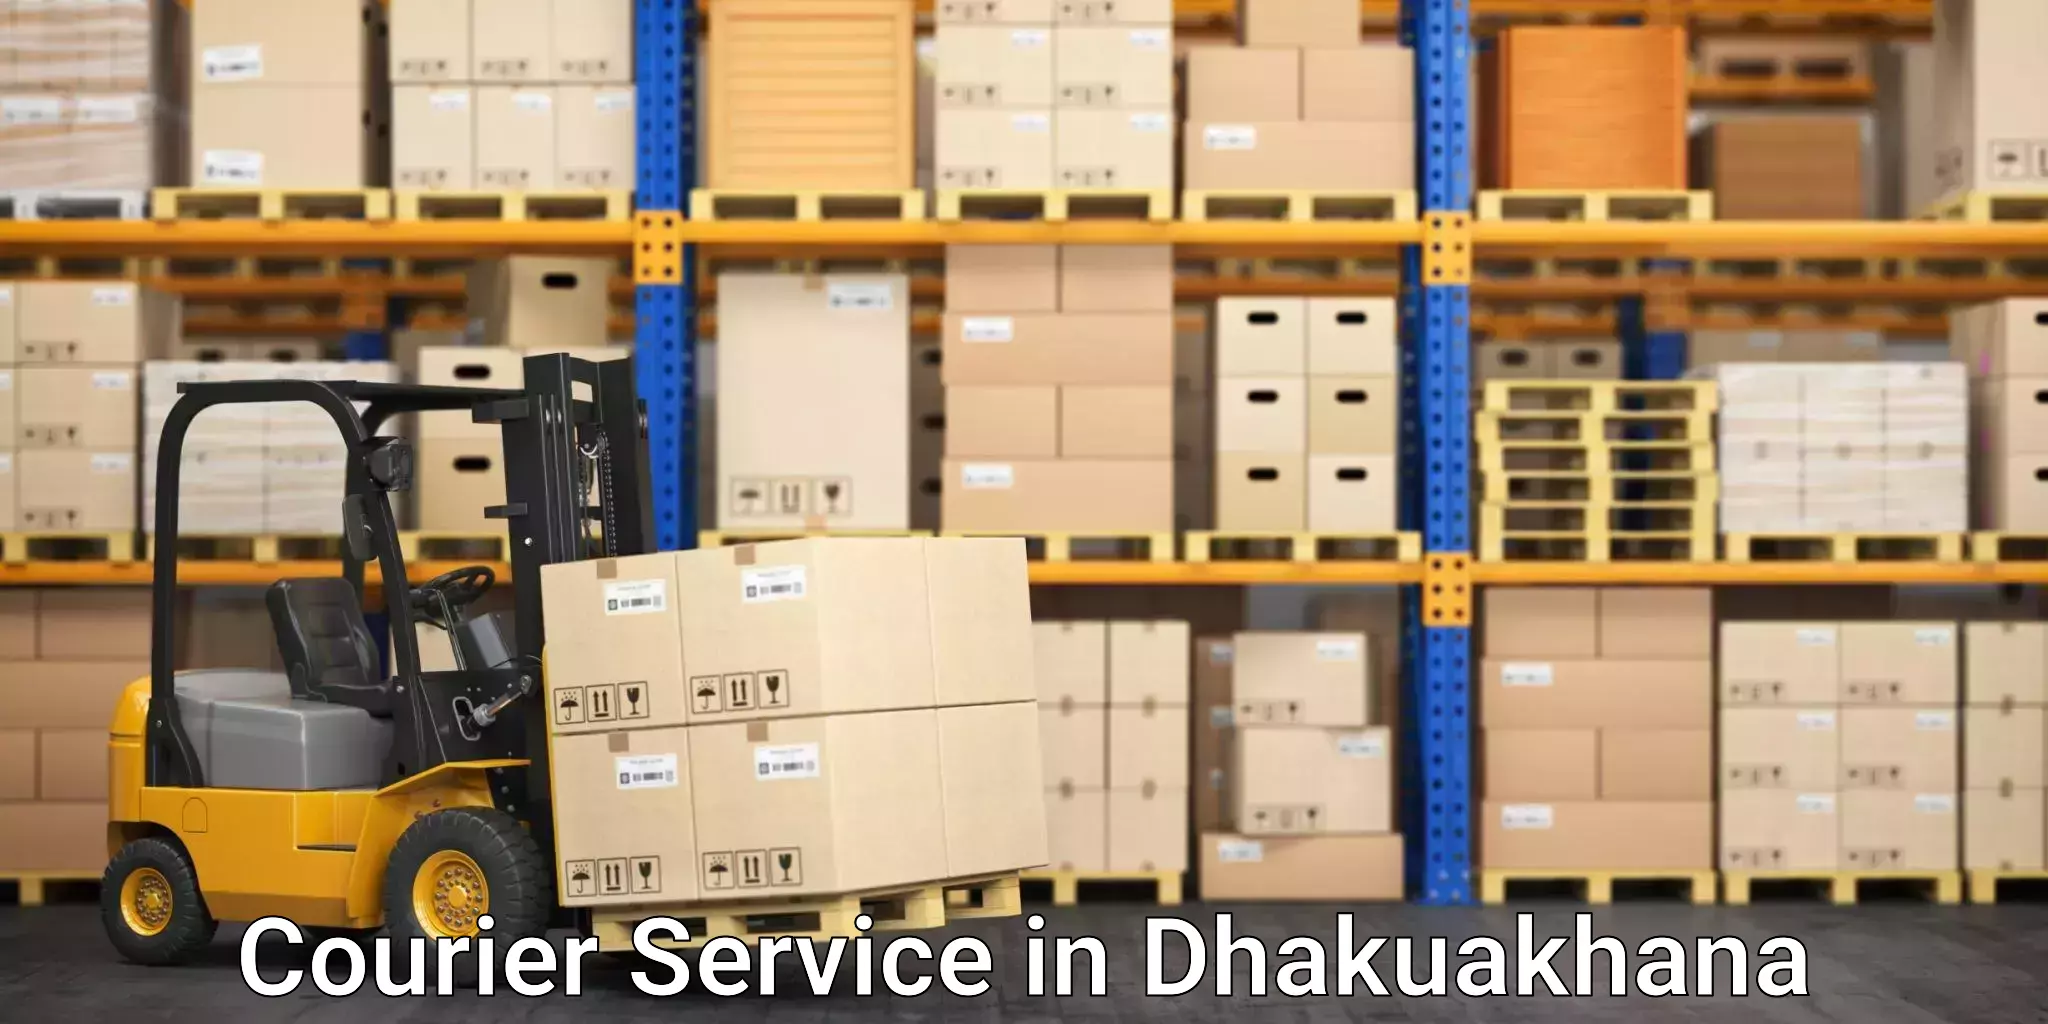 Advanced shipping network in Dhakuakhana